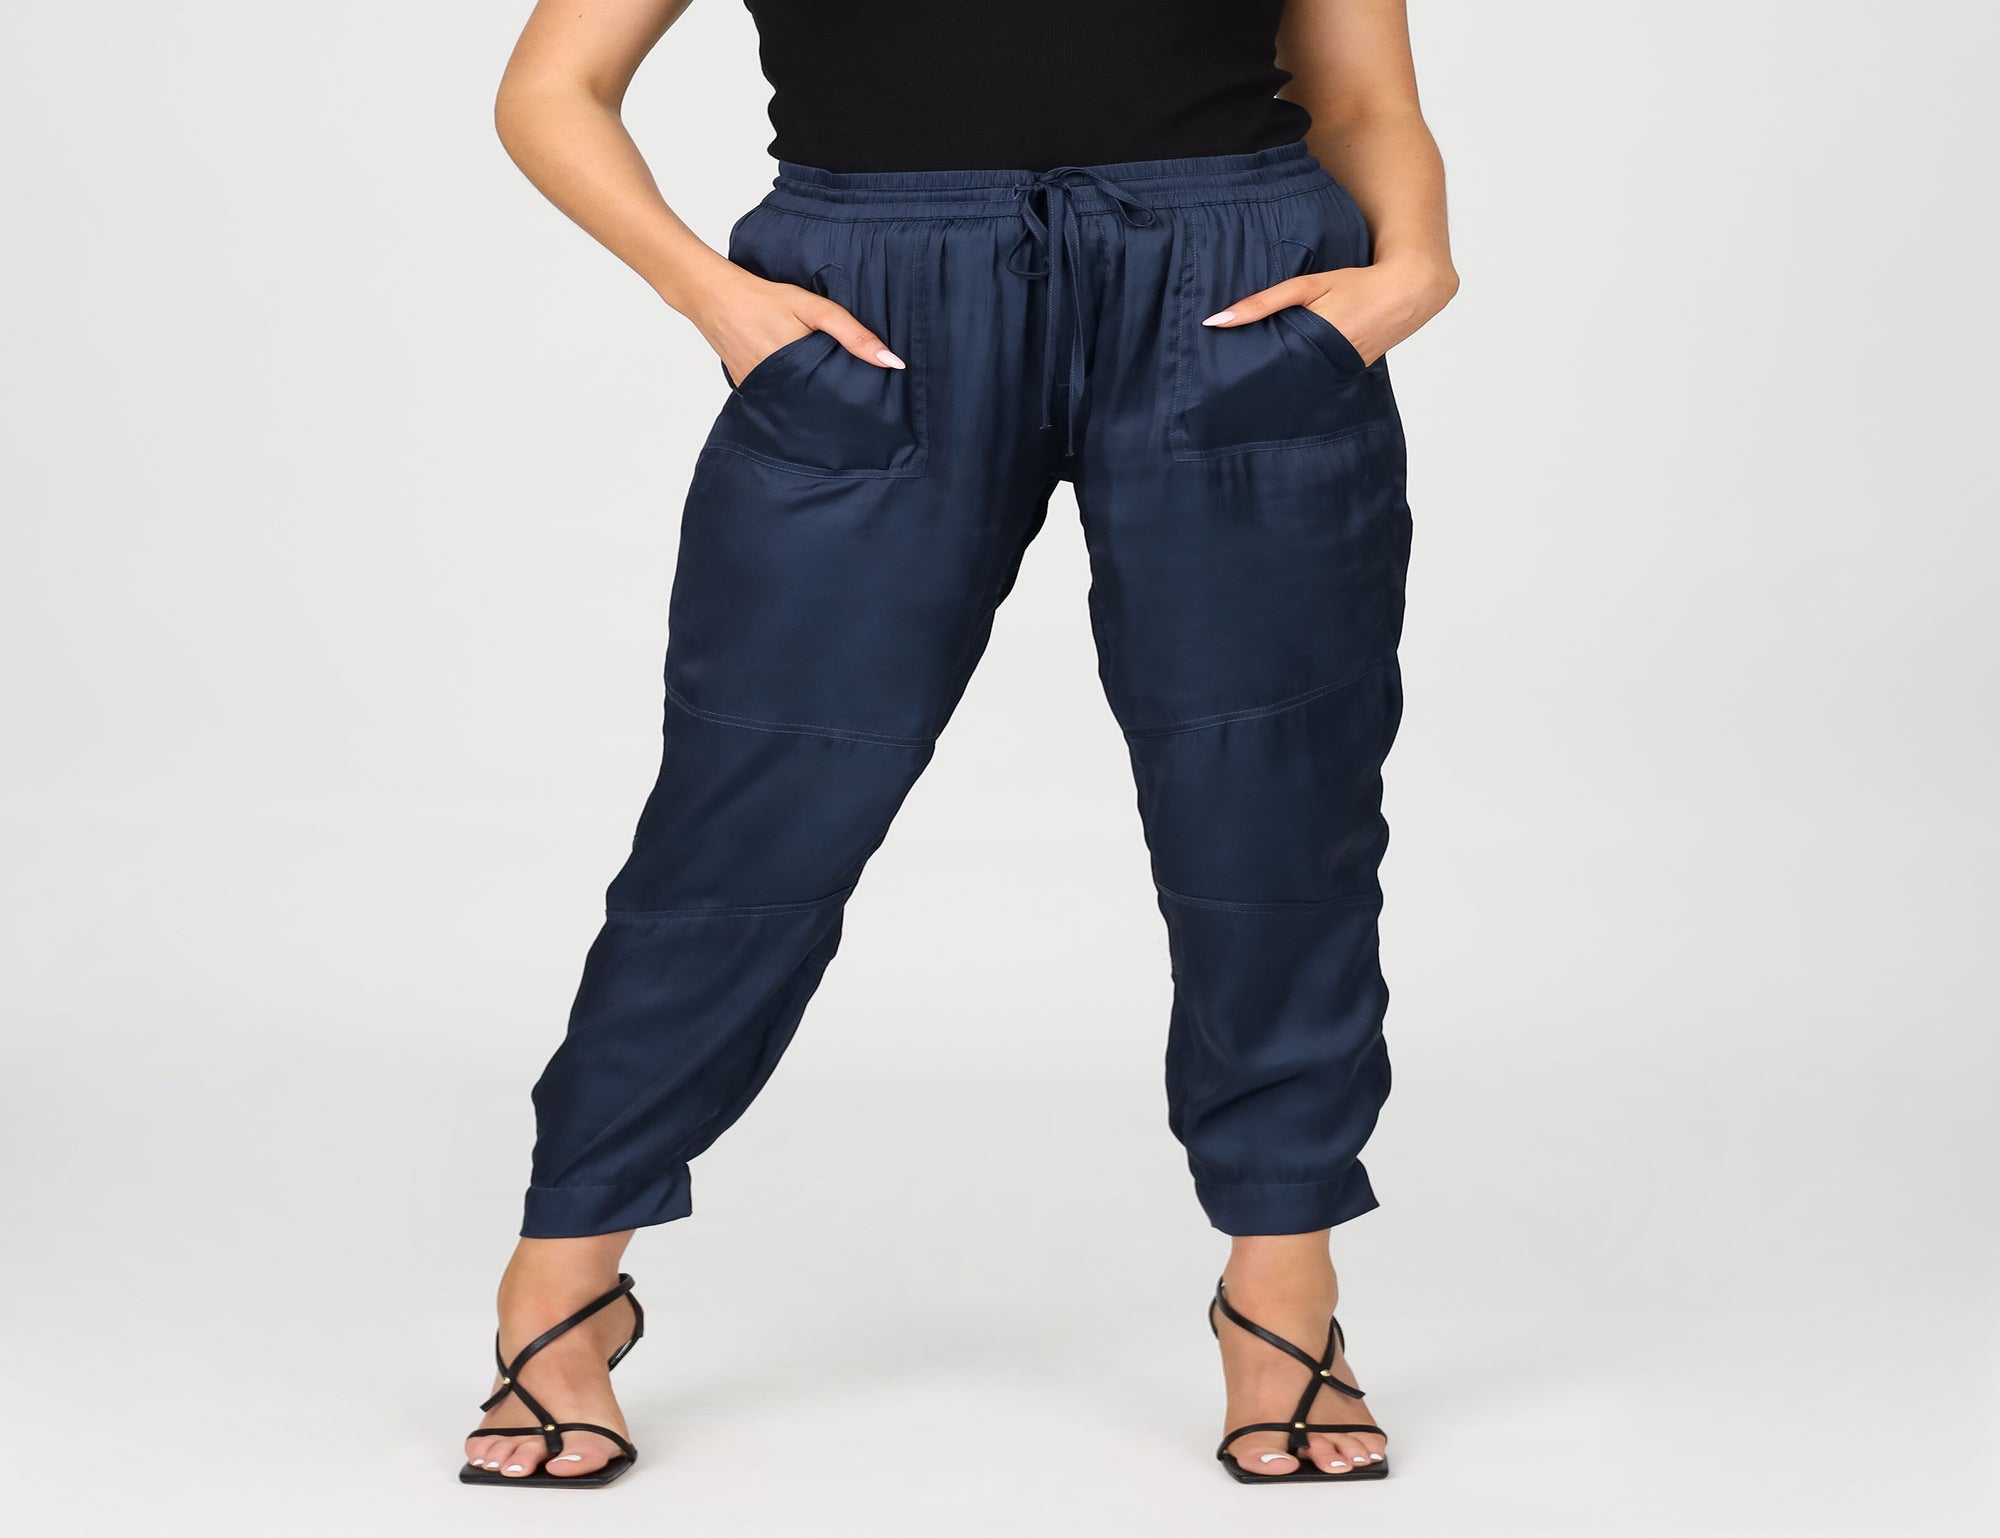 Slouch Satin Pant - Diesel - Pants - Full Length - Women's Clothing - Storm